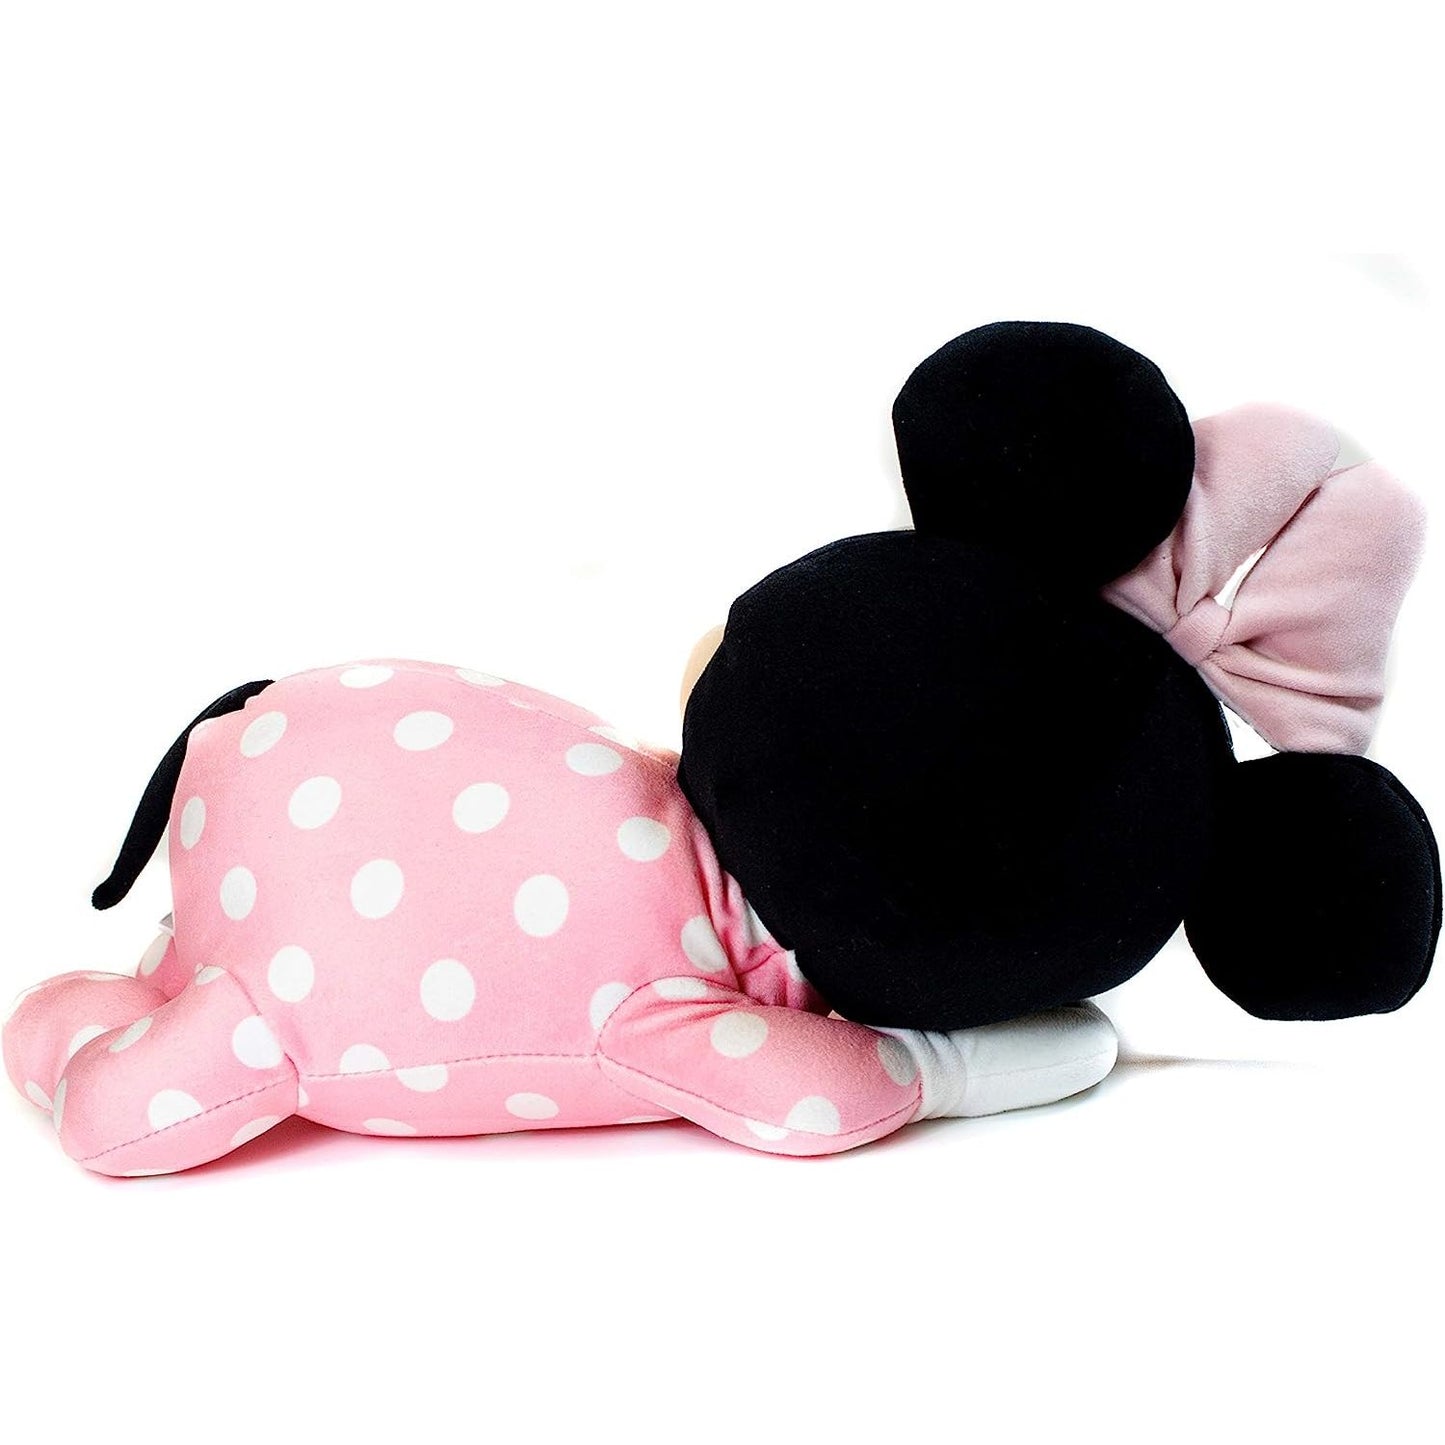 Disney - Sleeping Baby - Minnie Mouse Plush Back view - Heretoserveyou